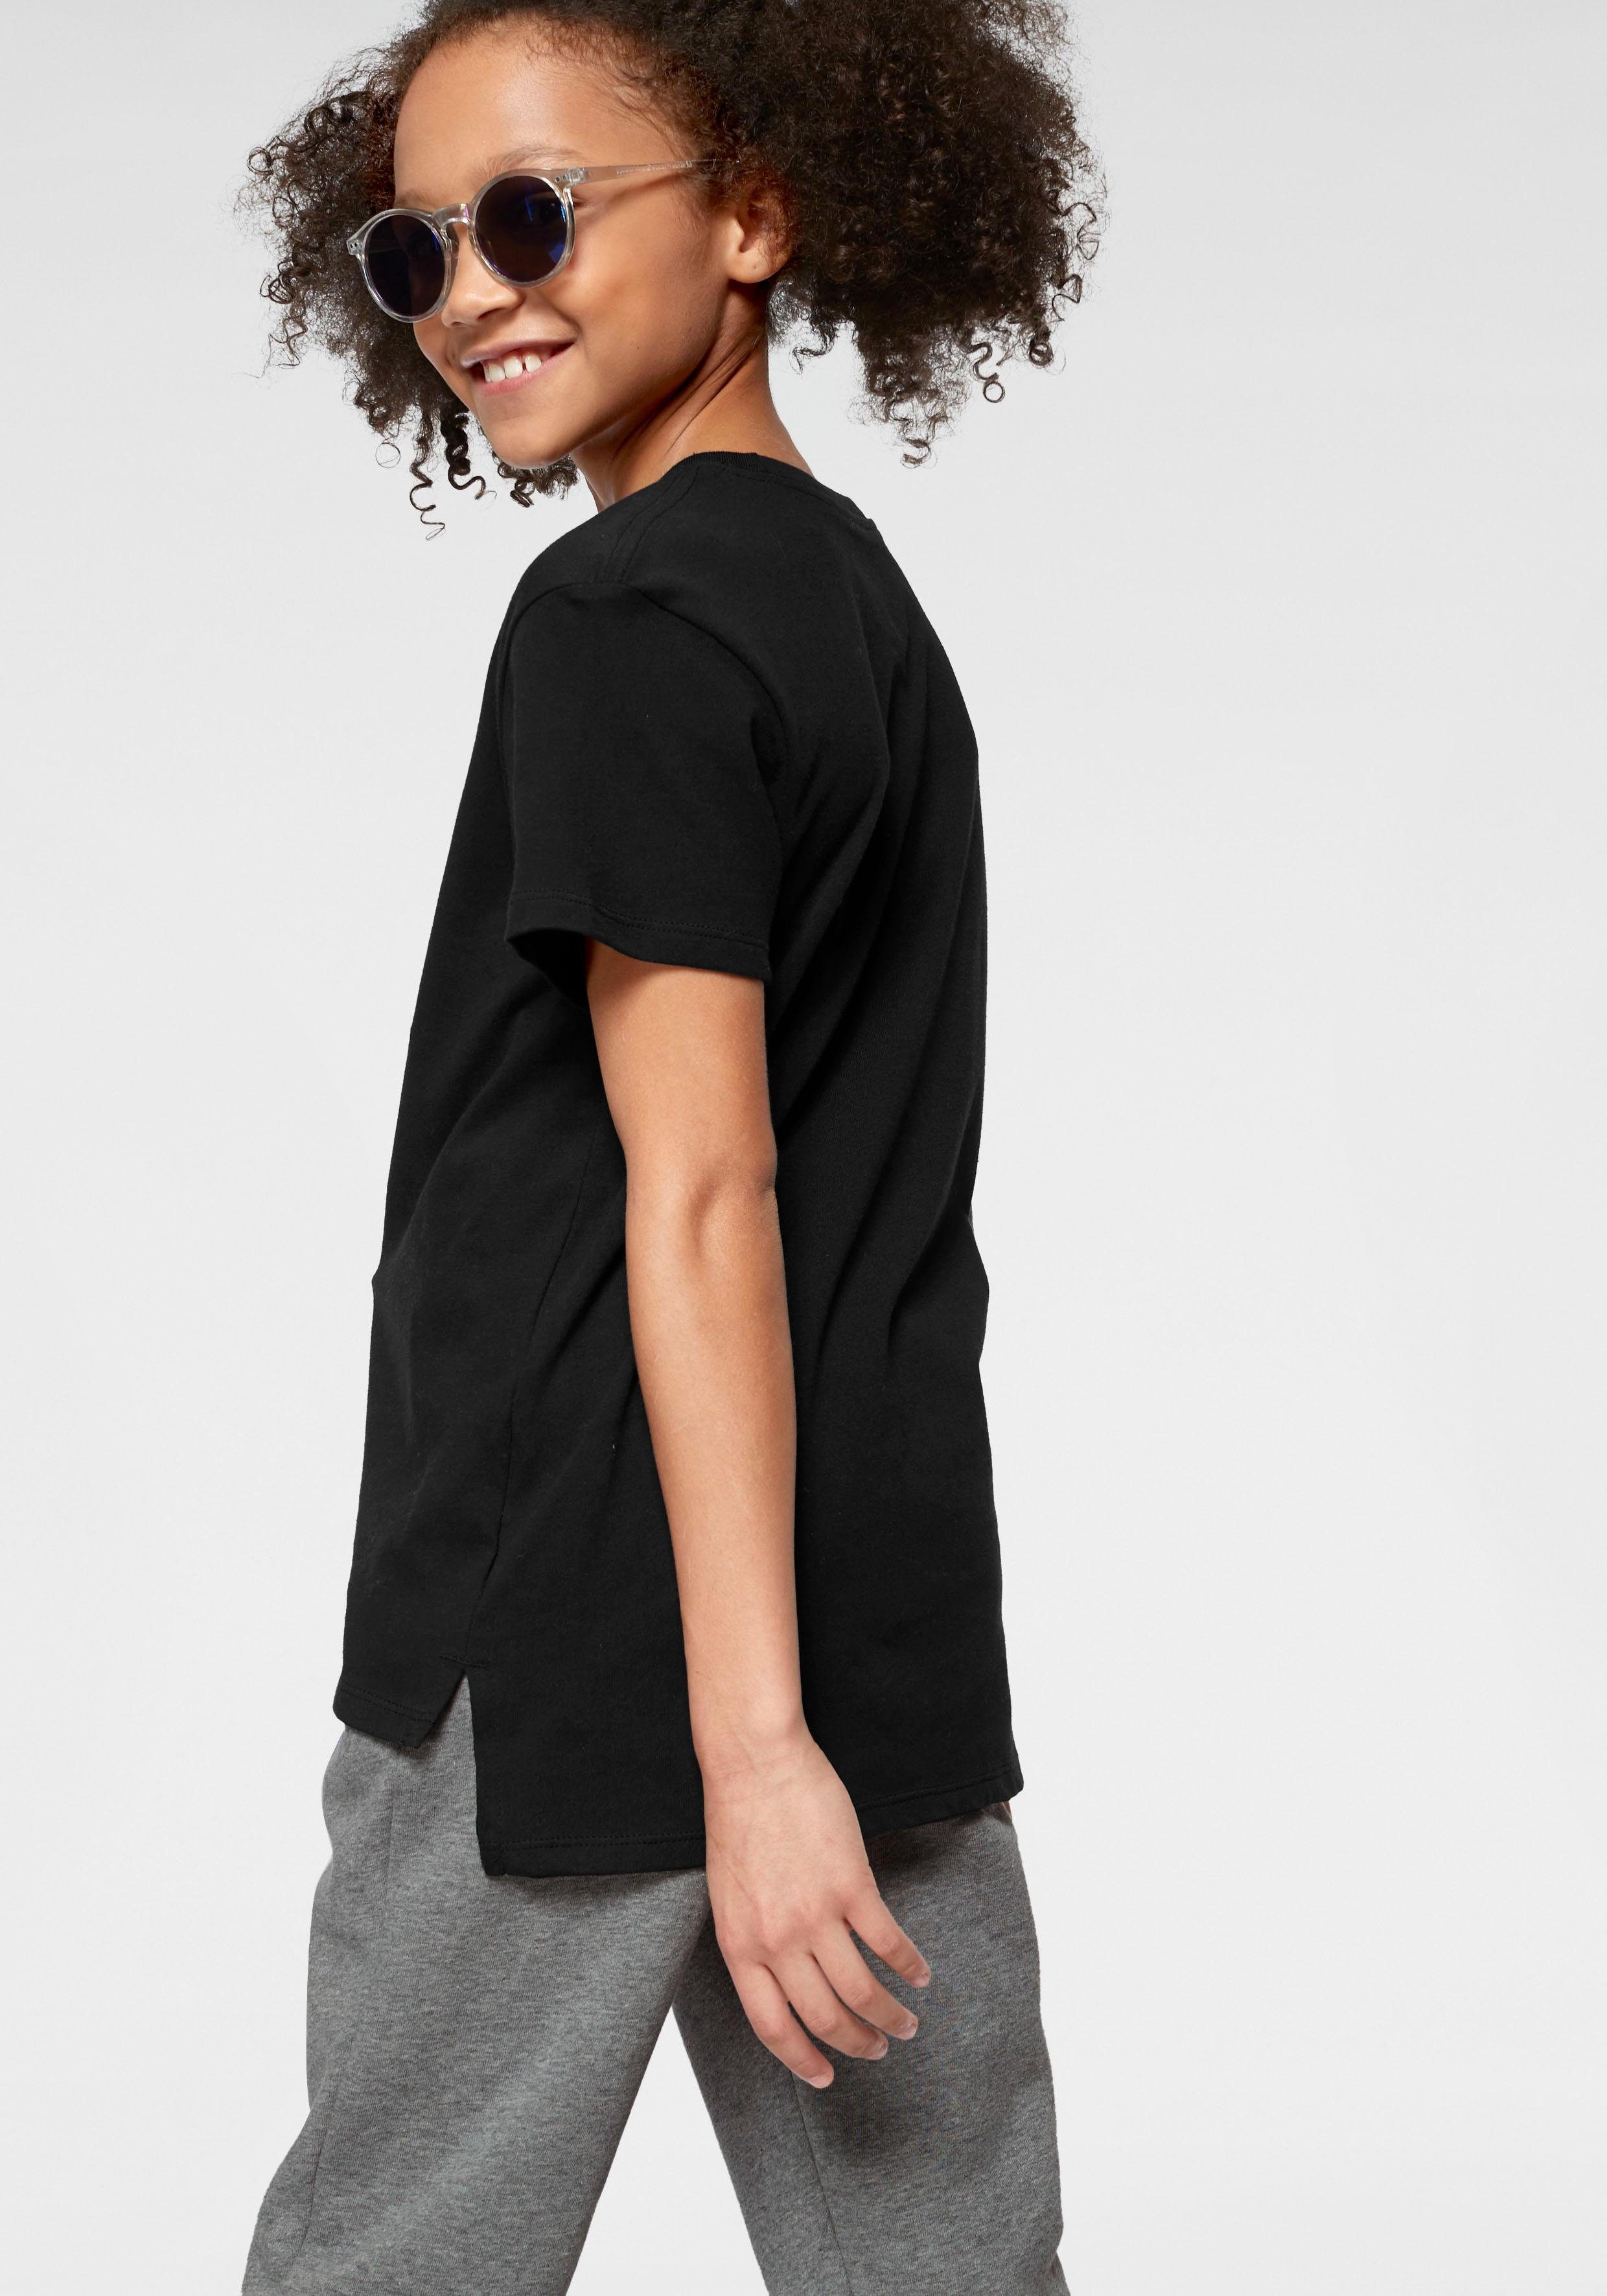 Nike Kids' T-Shirt Big schwarz T-Shirt Sportswear